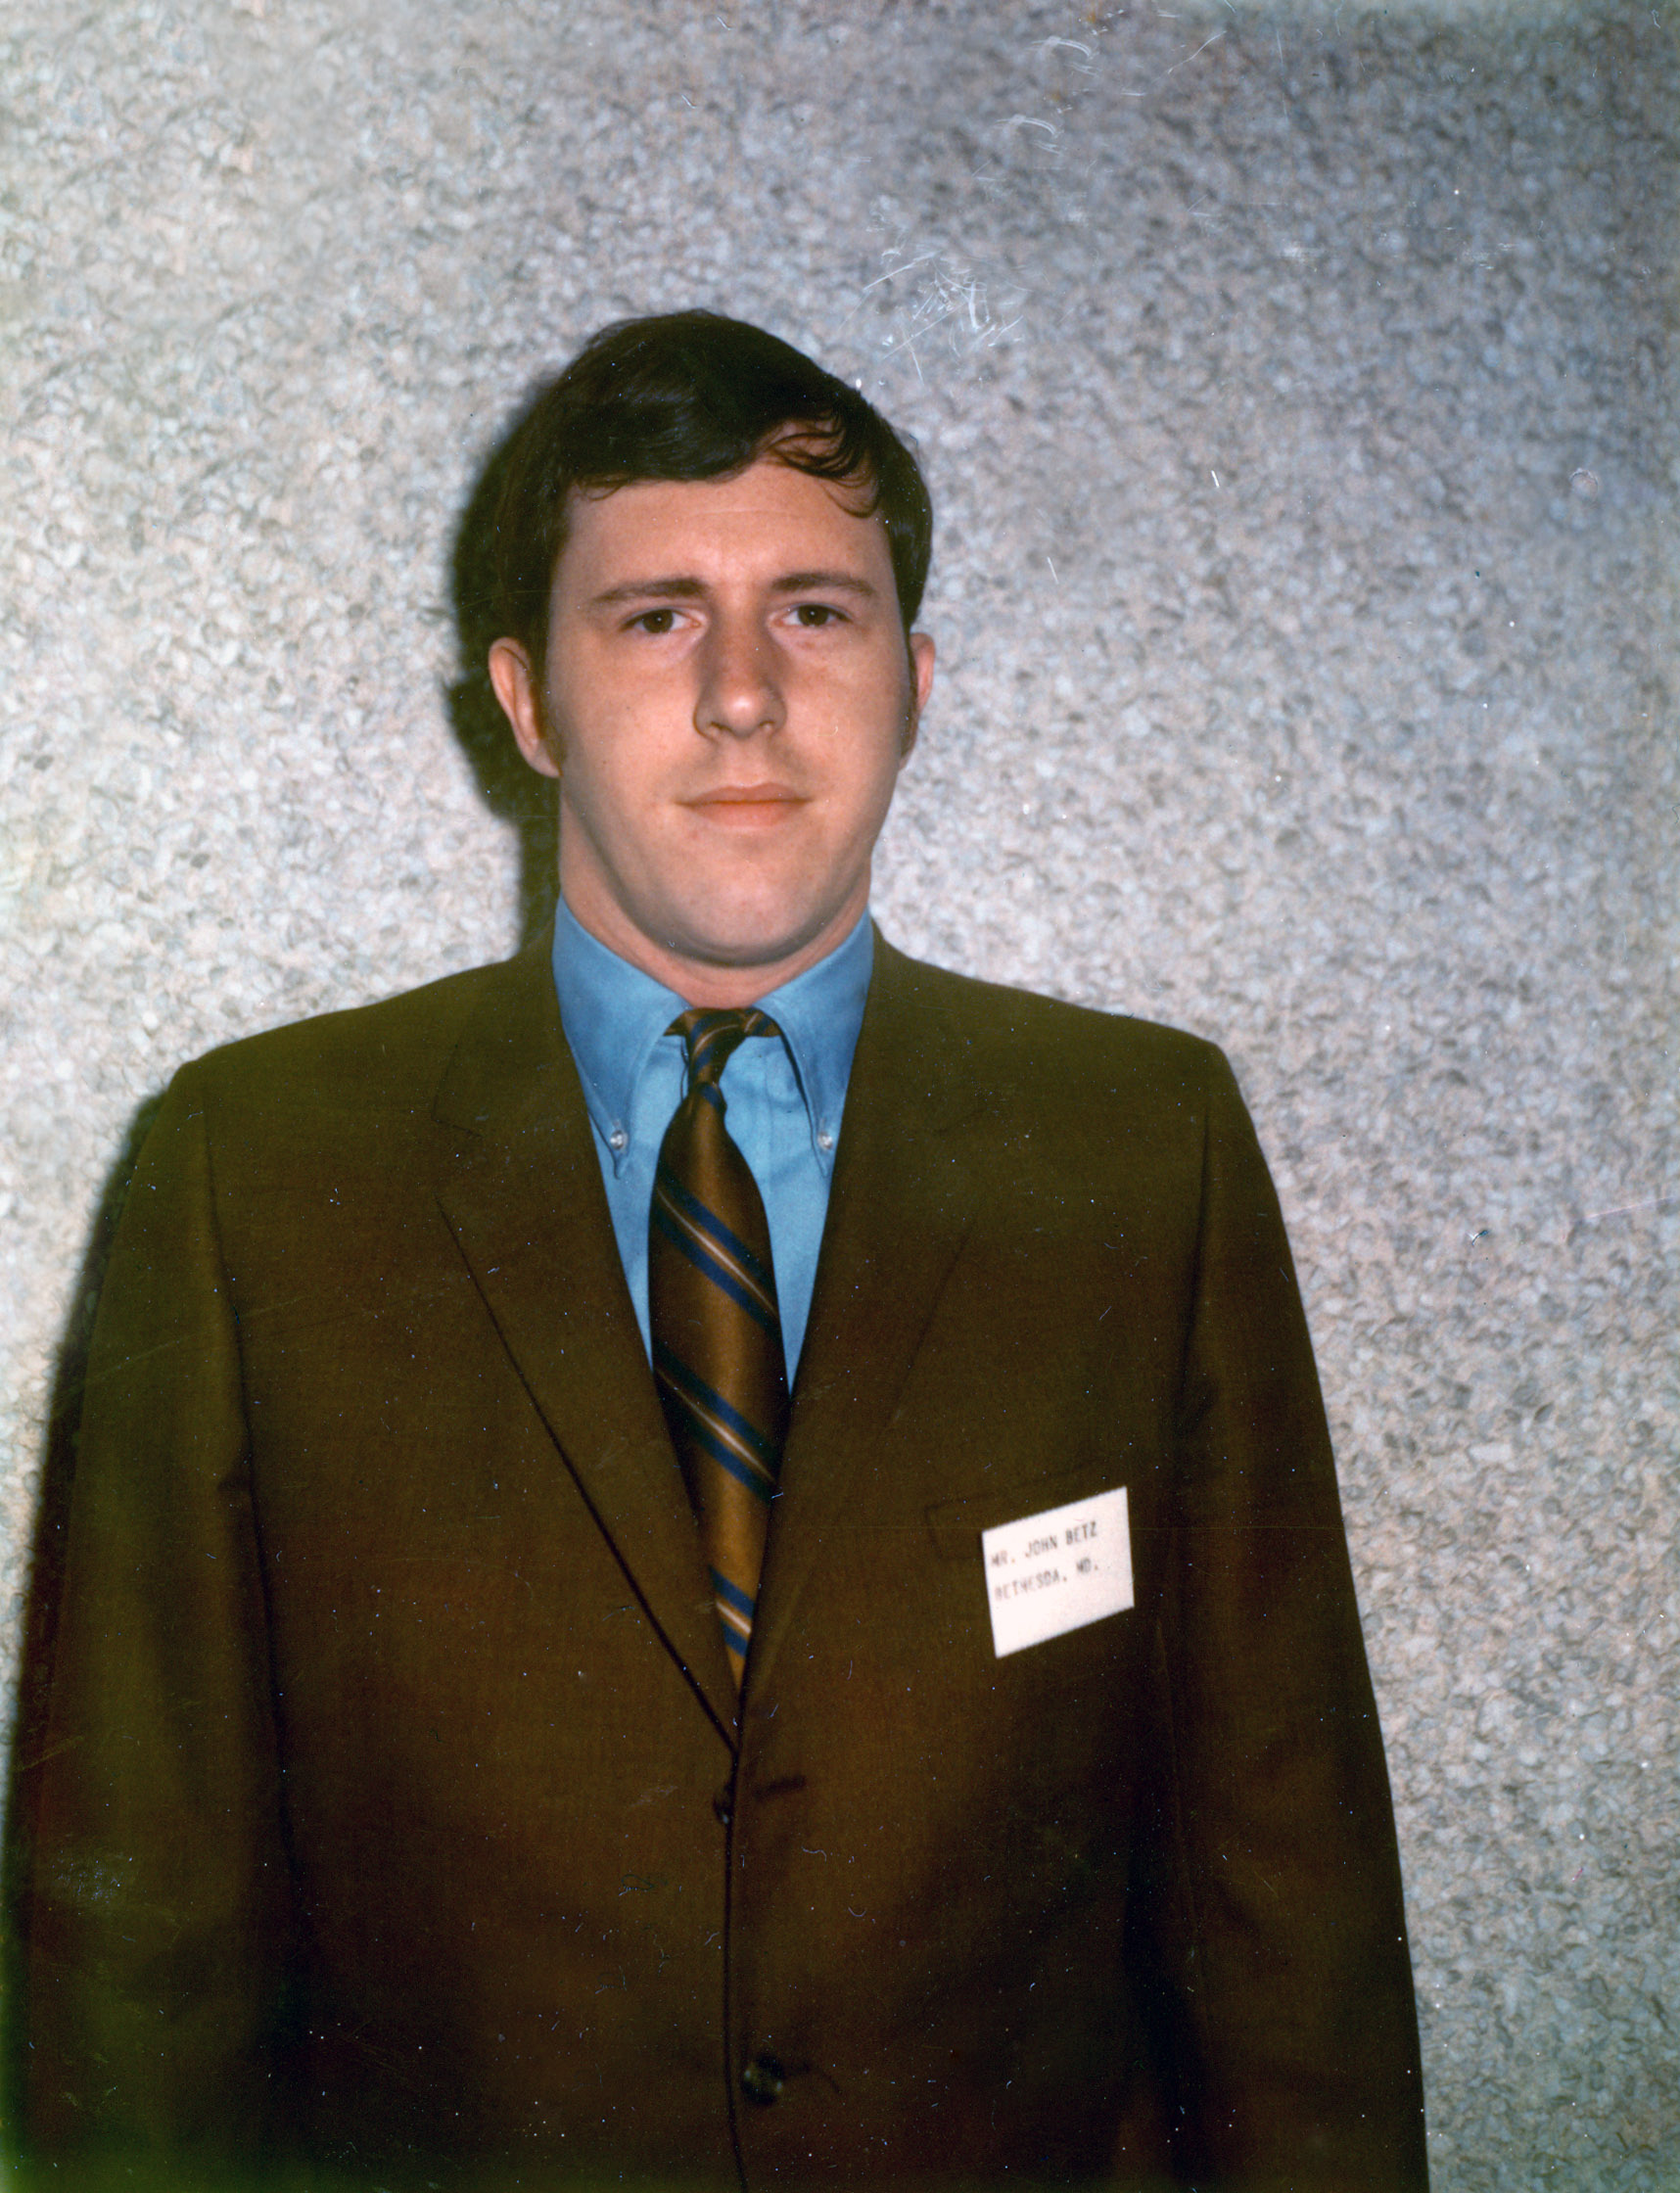 John Betz's 1969 MEDEX admissions photo